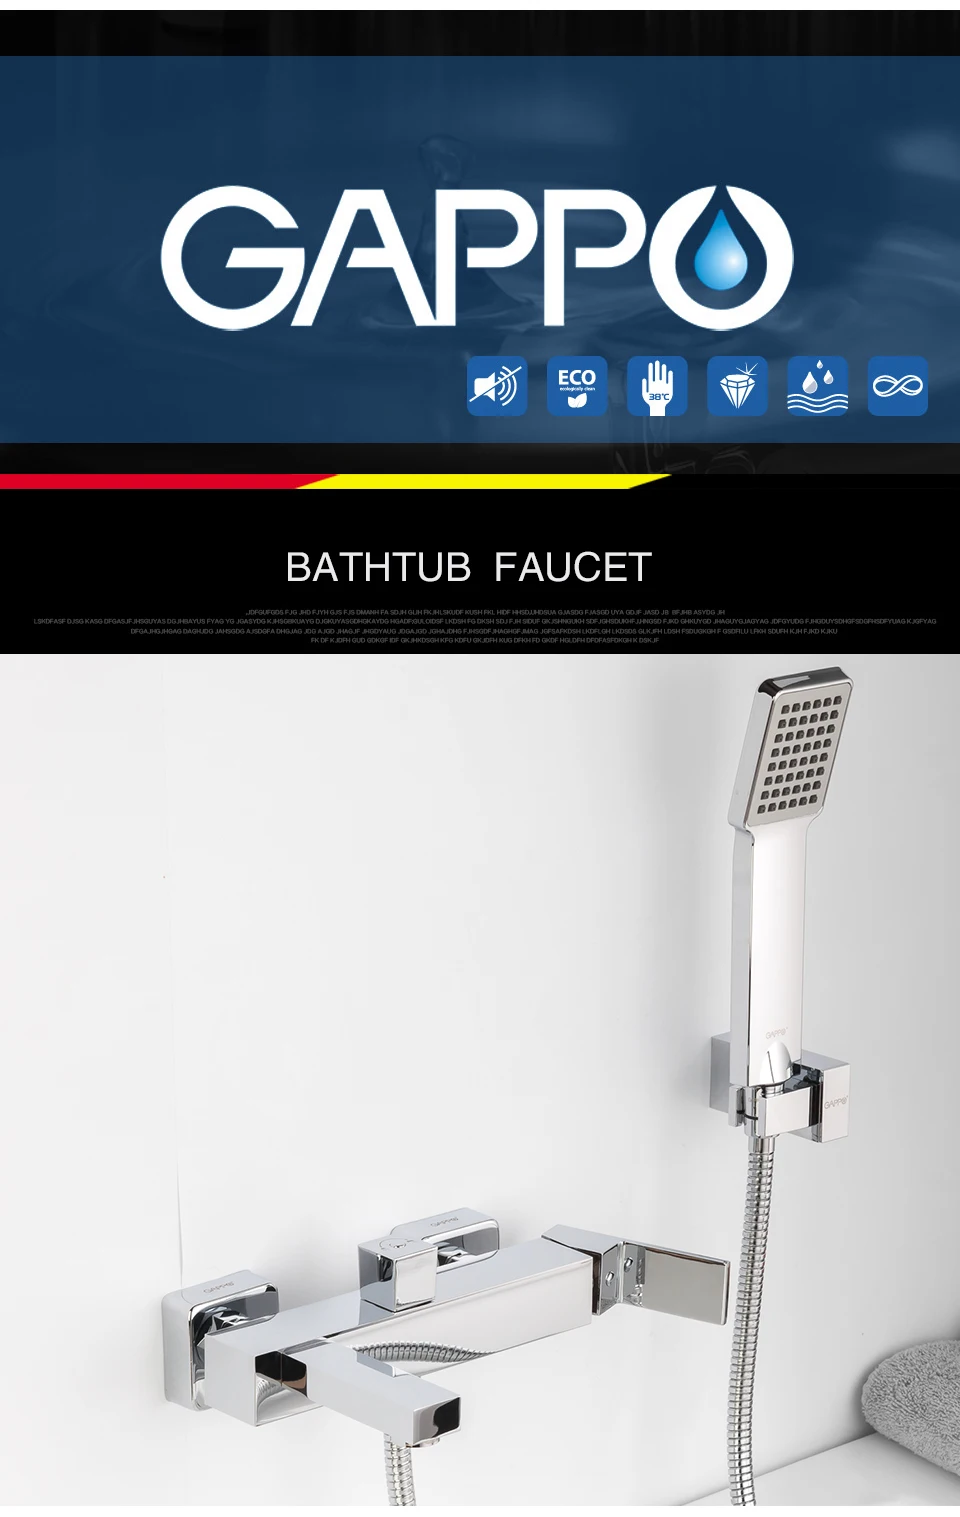 GAPPO смеситель для ванны s латунный кран для ванны Водопад кран для ванны кран на бортике robinet baignoire